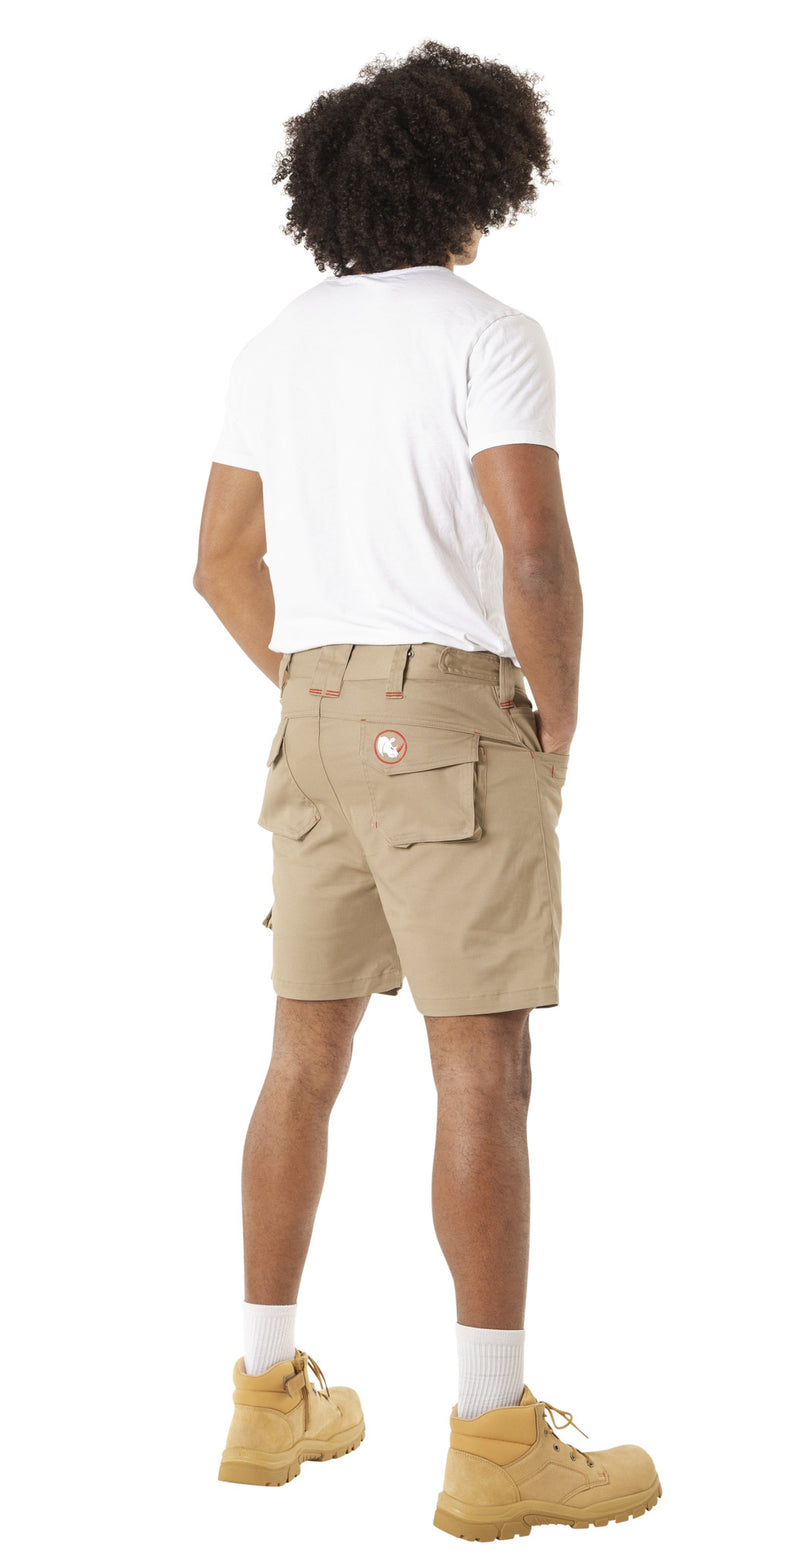 Mens Work Shorts Flexible Durable Tough - Beige Khaki [ SIZE 36 ]